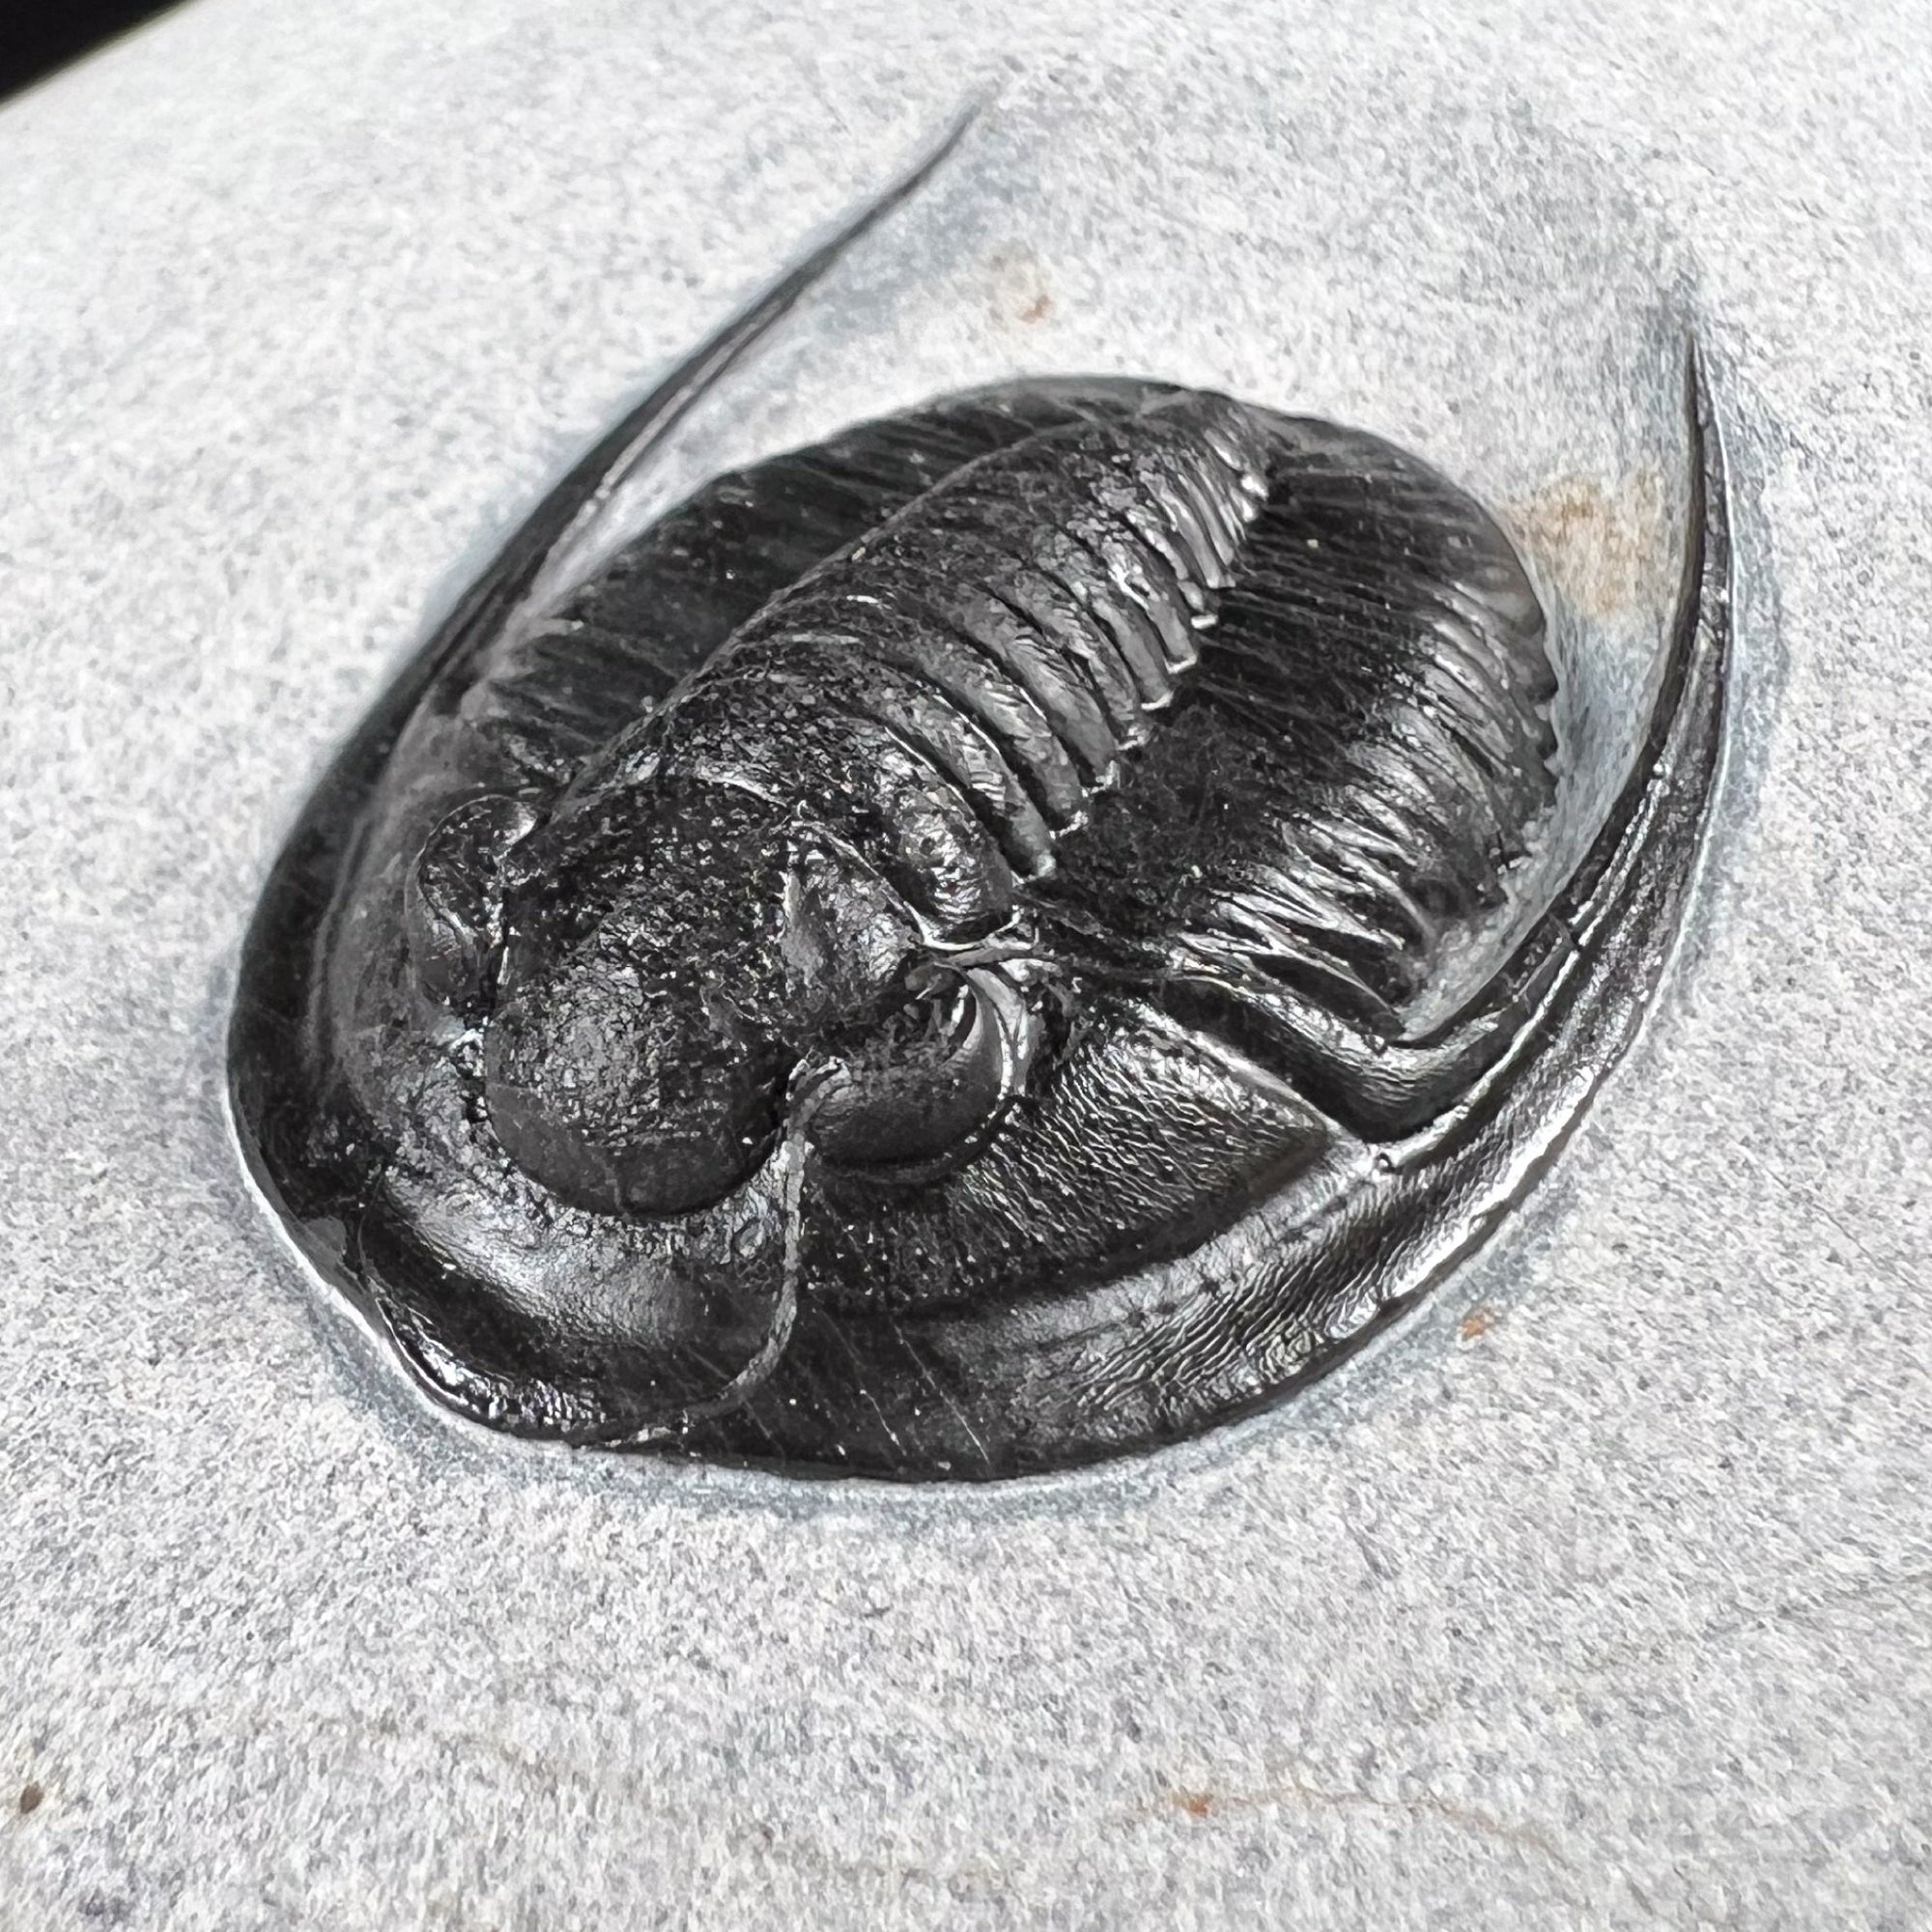 Cornuproetus Trilobite Fossil from Hamar Laghdad Formation